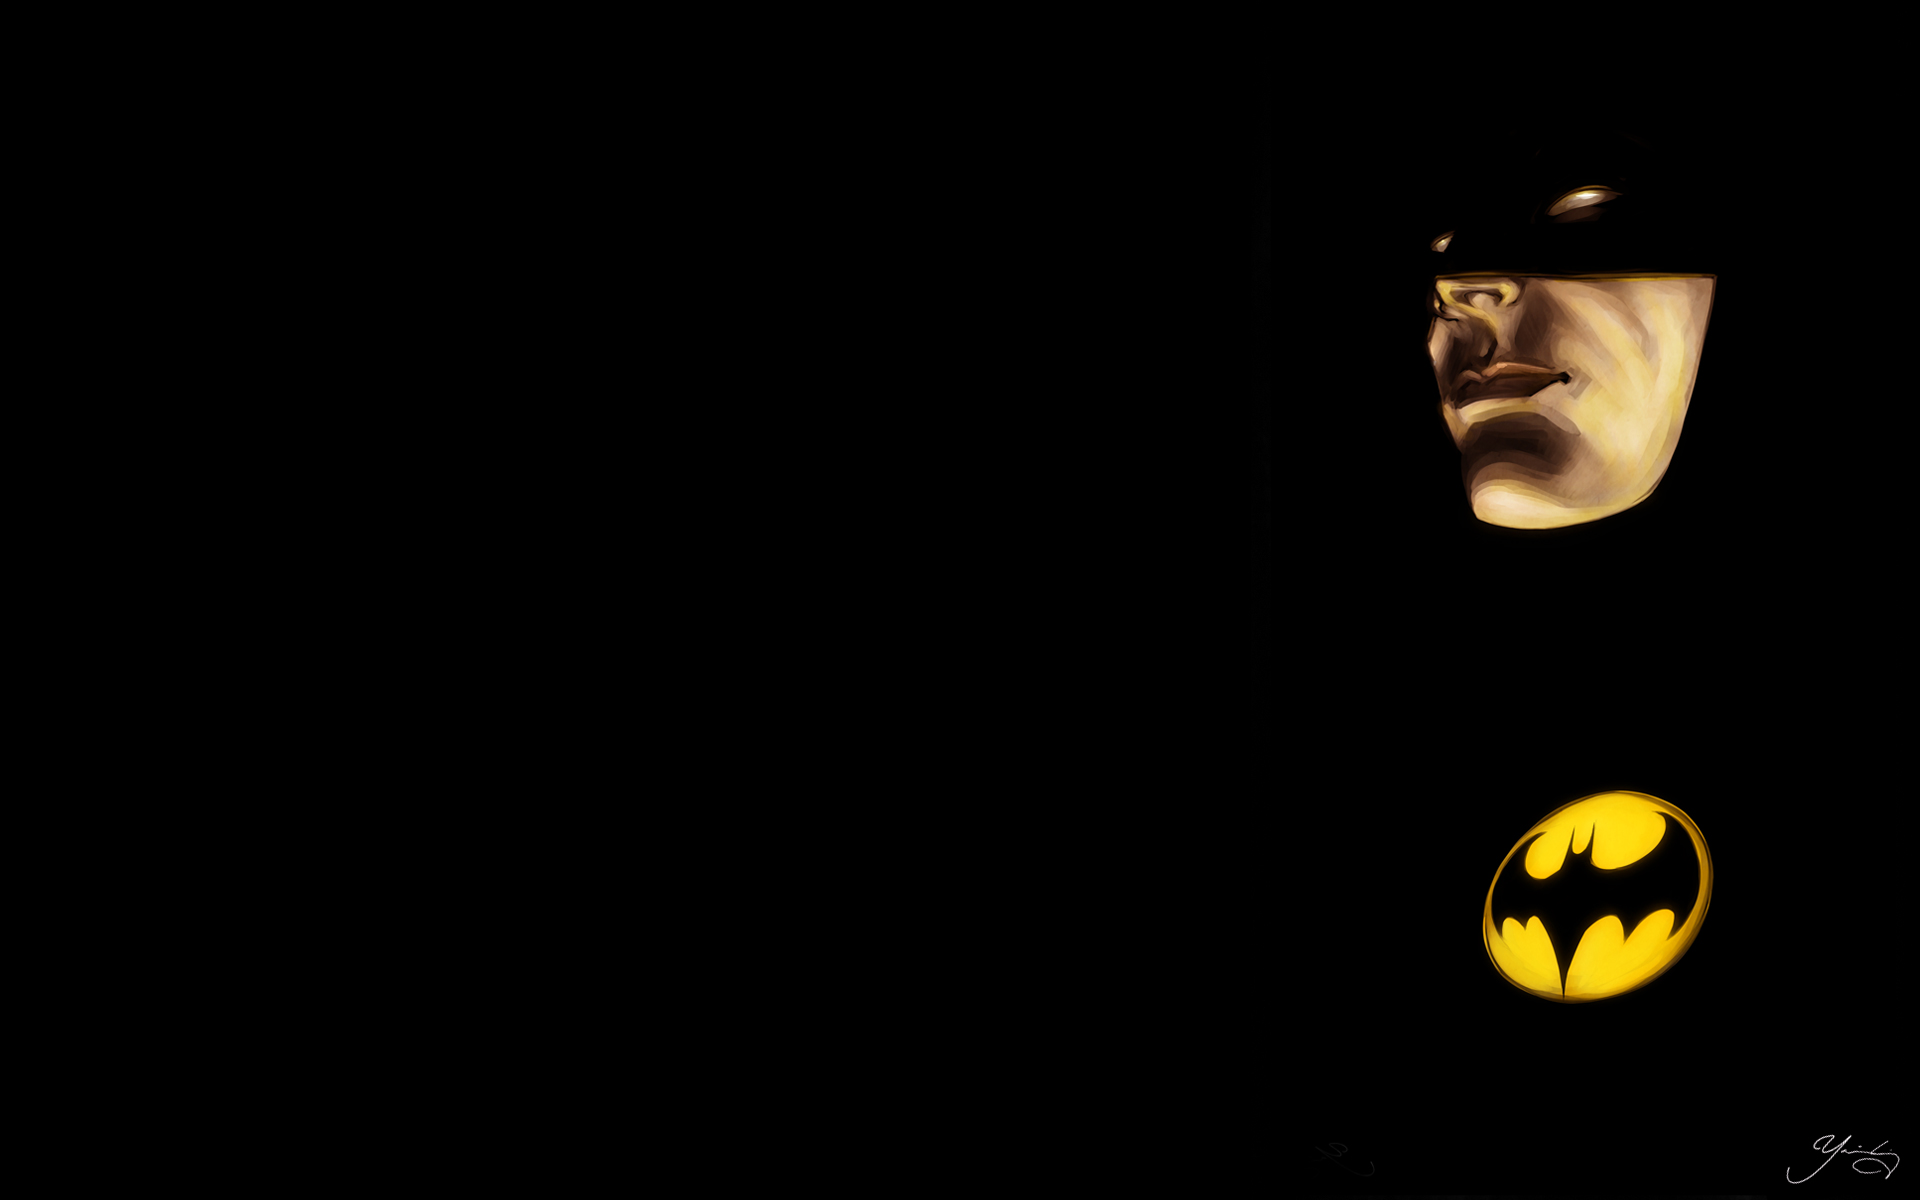  Batman Logo wallpapers For Free Download HD 1080p